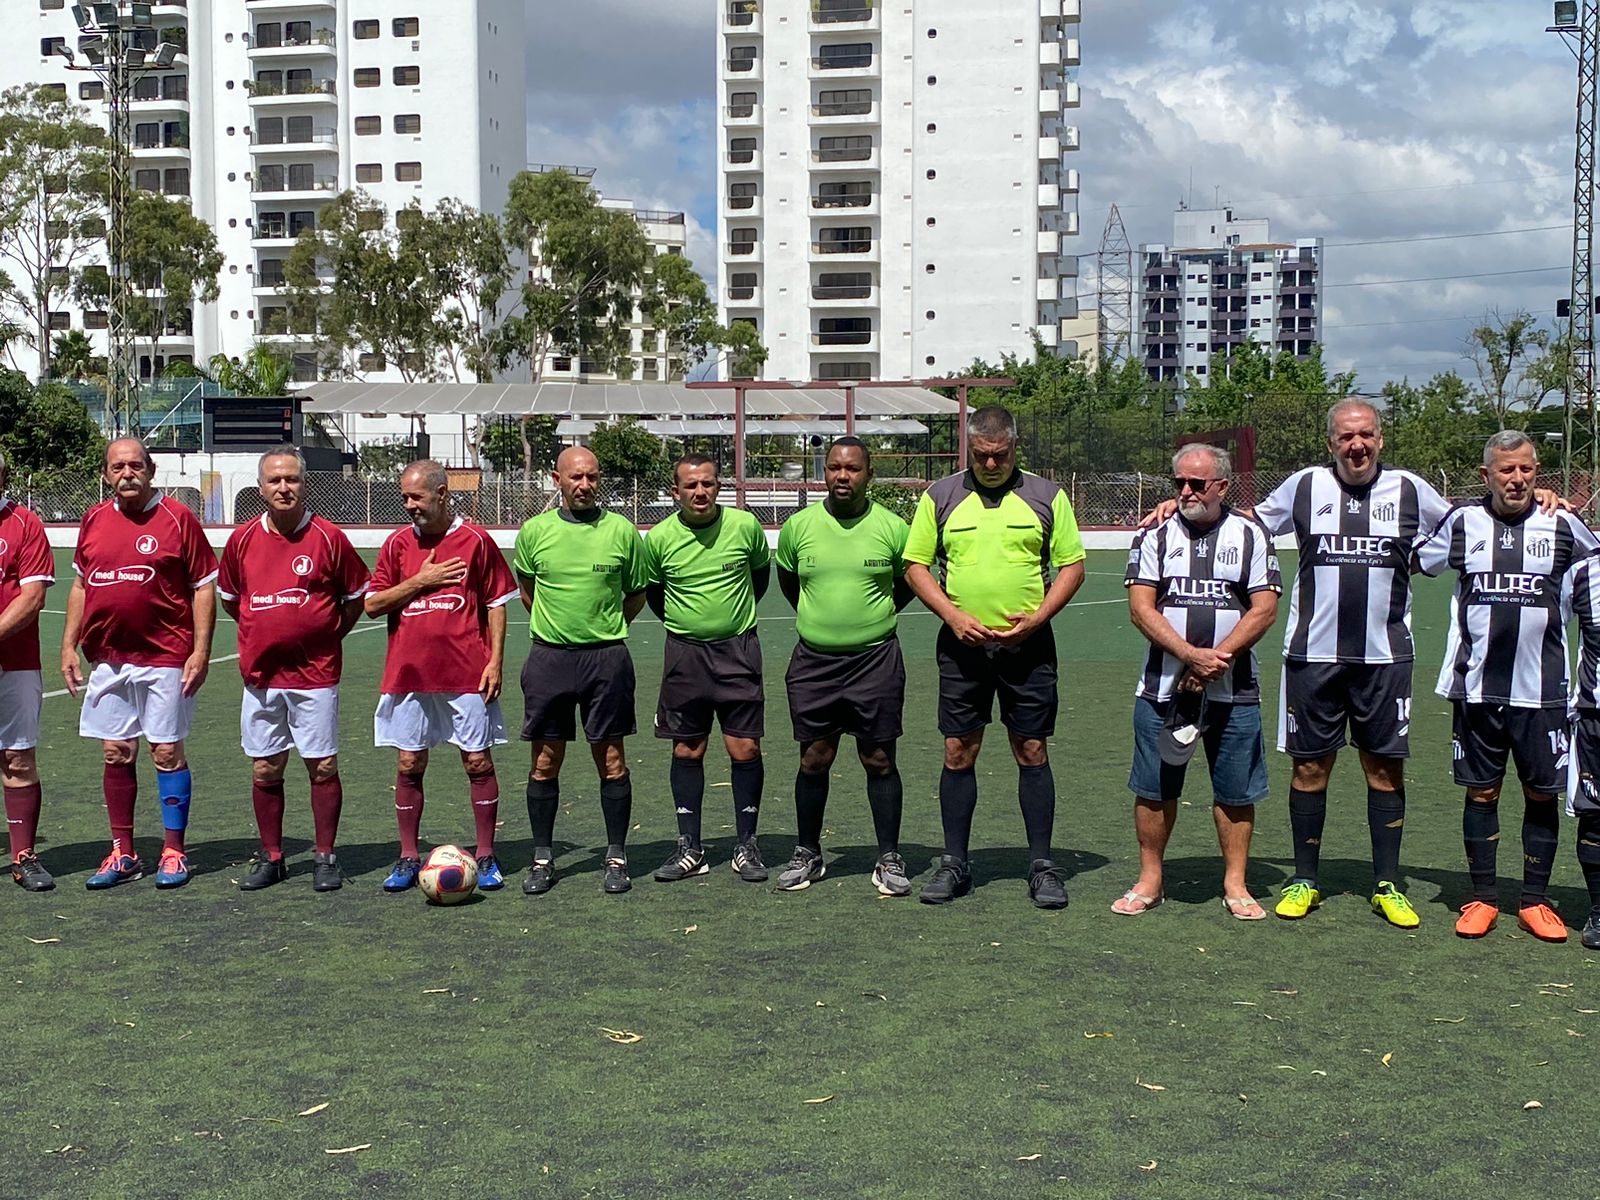 Clube Atlético JuventusLoja Grená e Branco - Clube Atlético Juventus